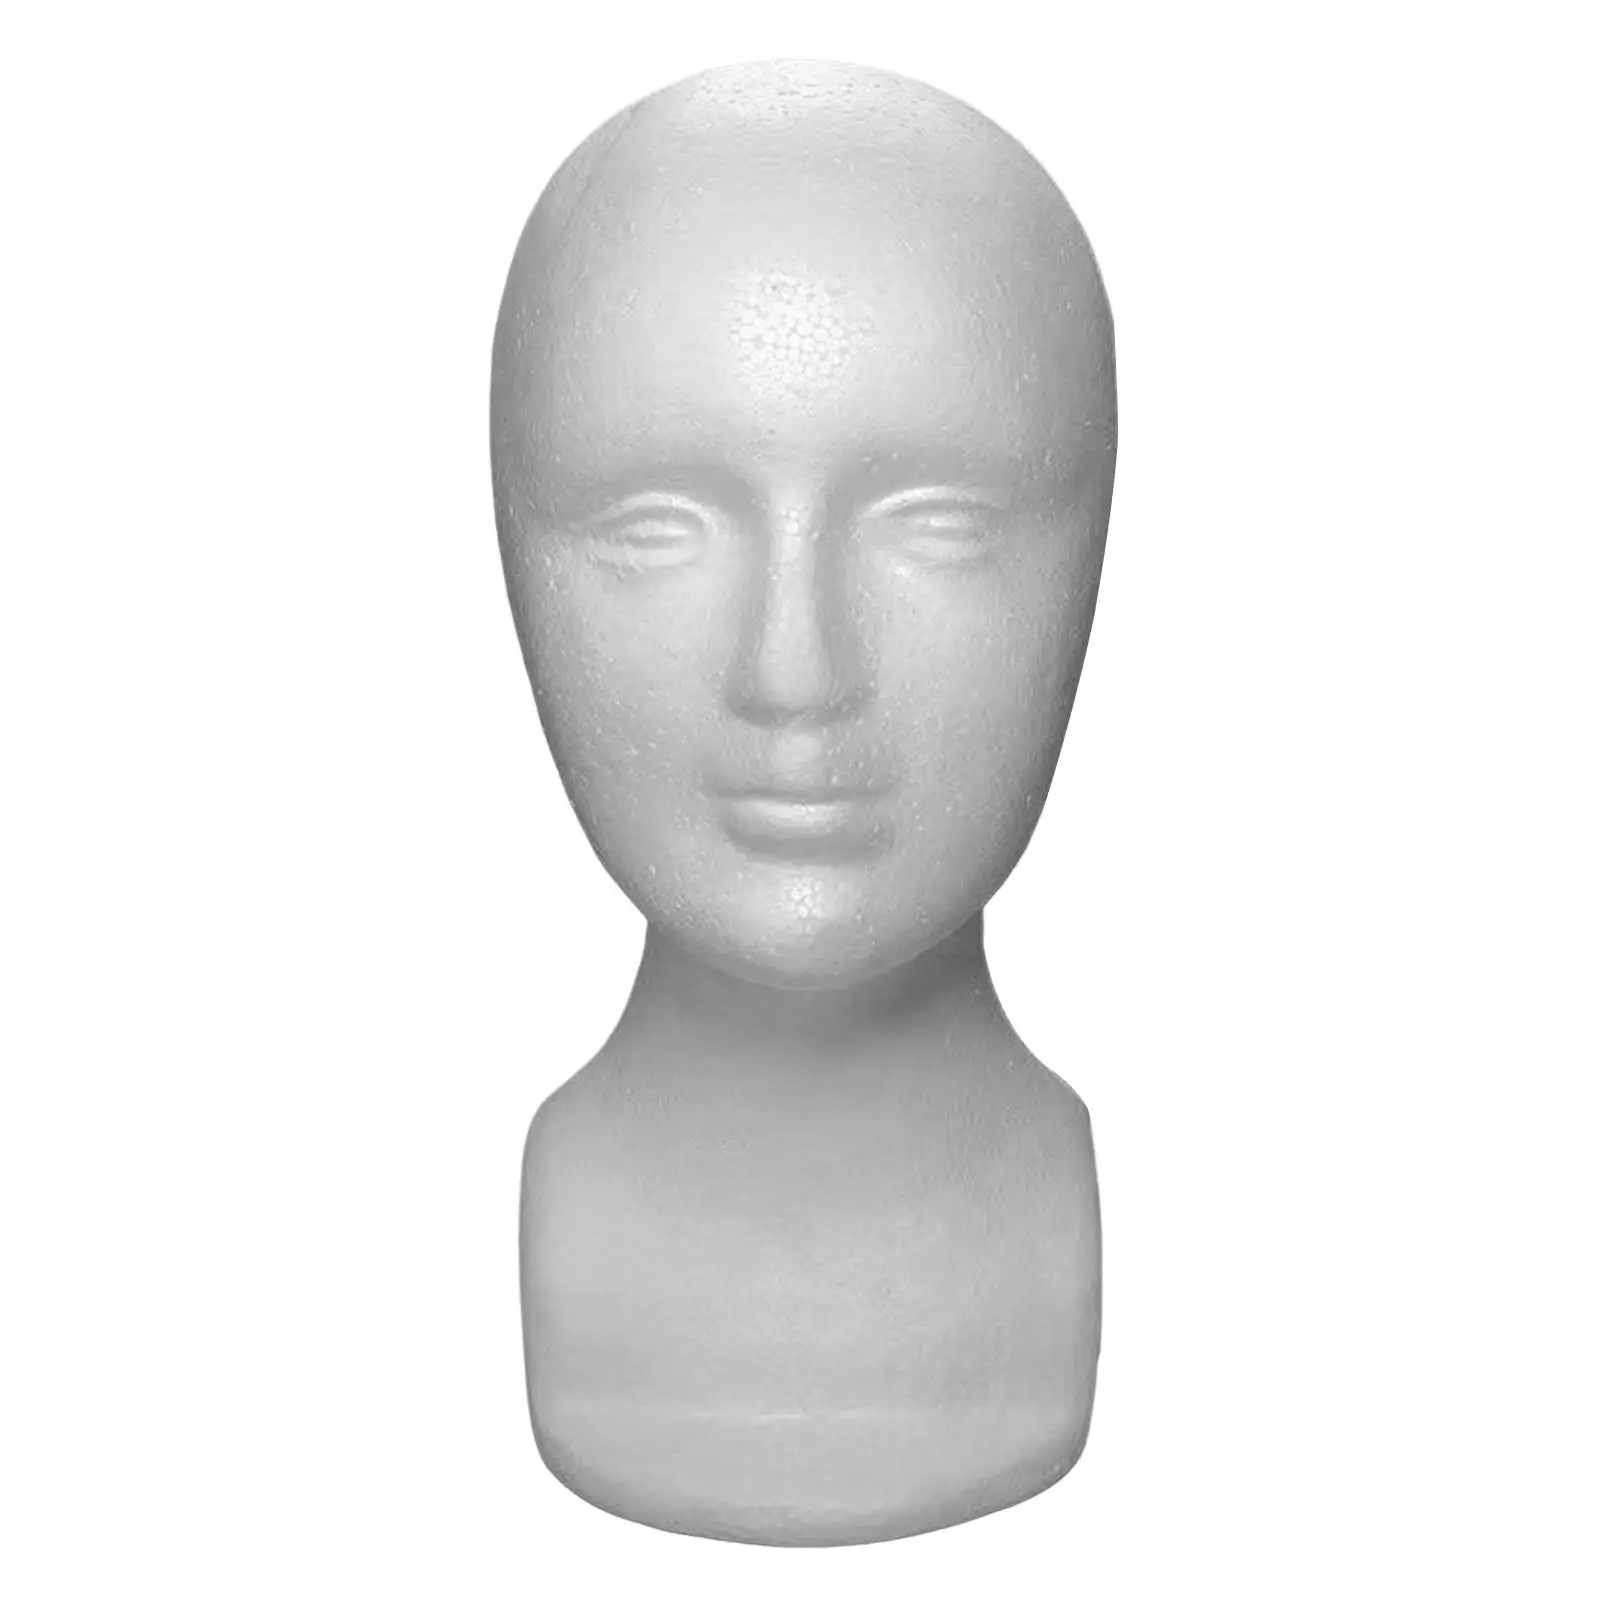 Styrofoam Wig Head Lightweight Professional Multi Purpose Hat Display Stand Mannequin Manikin Head for Salon Shop Props Home